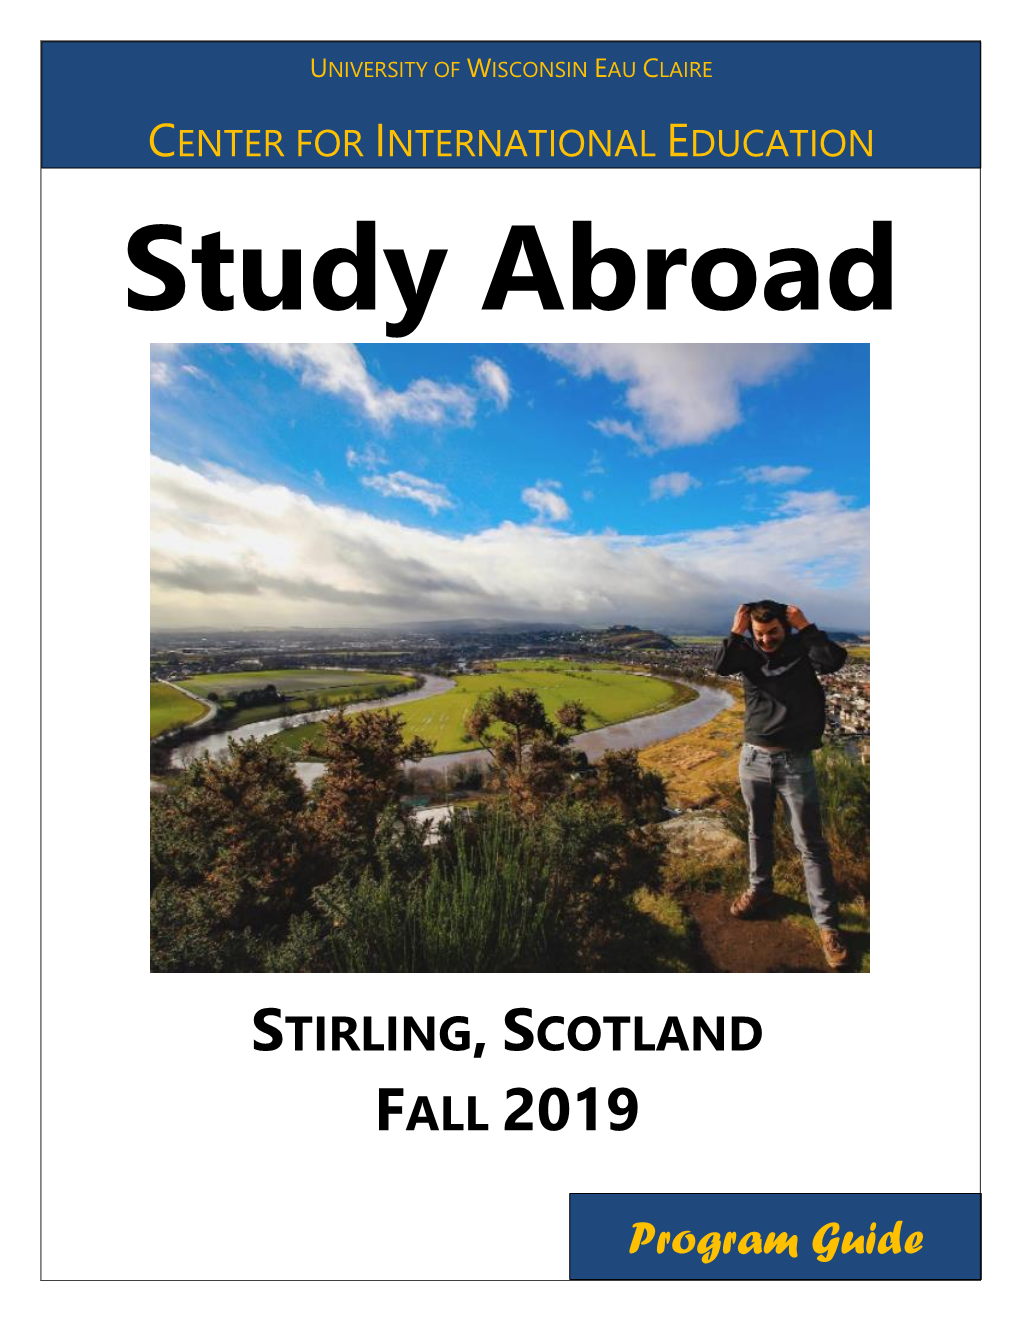 Stirling, Scotland Fall 2019